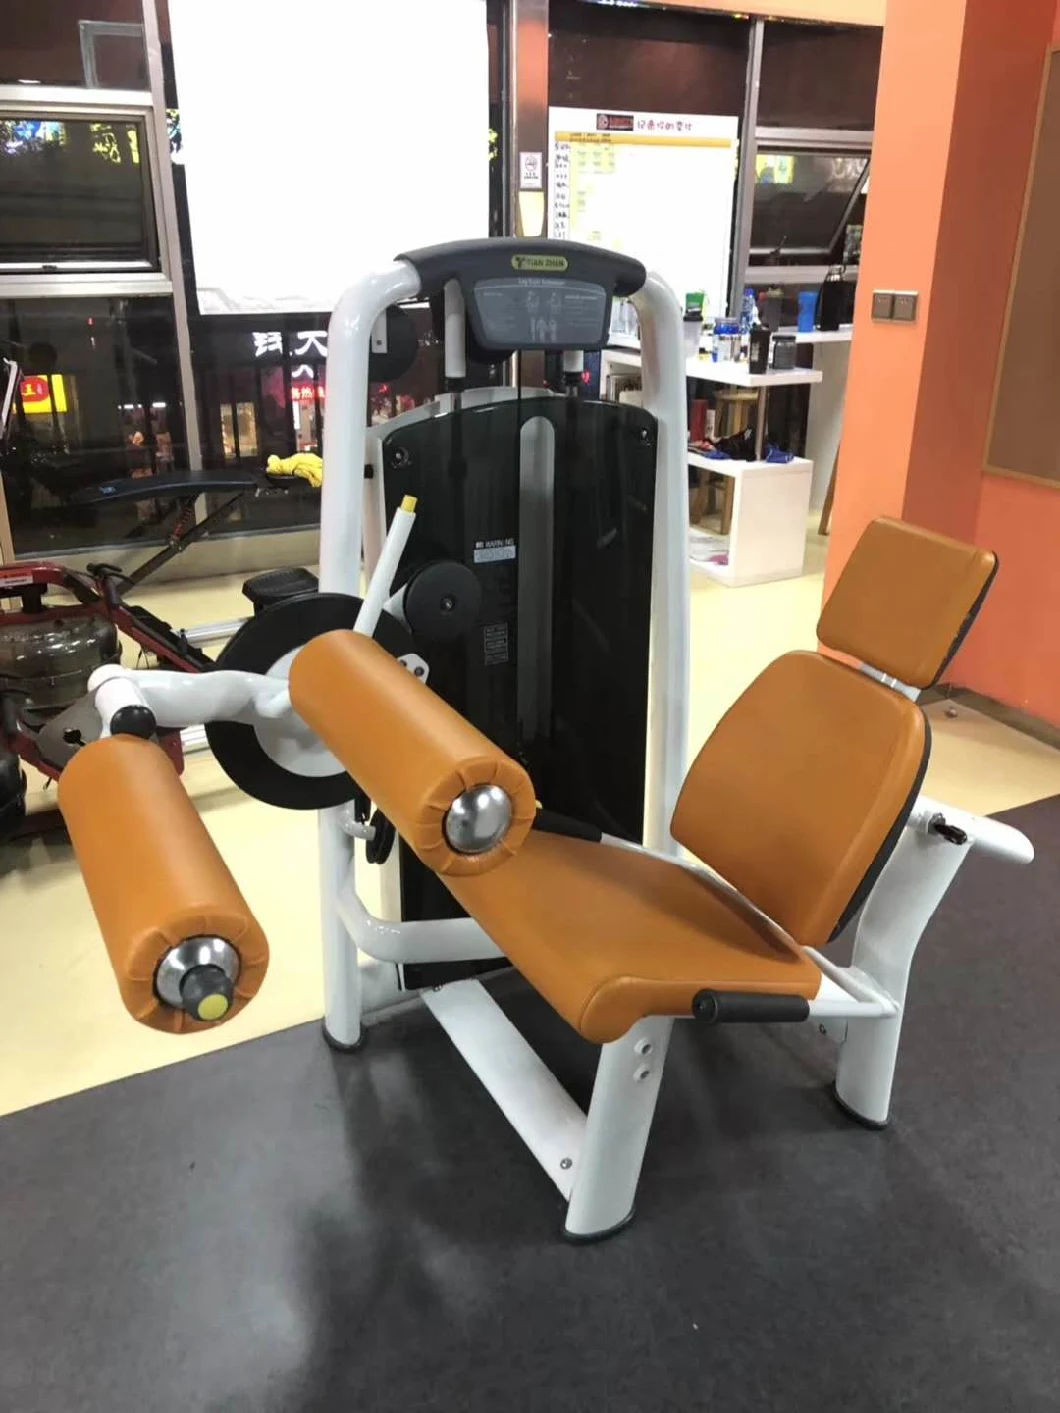 Tz-6055 Dual Functional Gym Equipment Leg Curl / Extension Machine